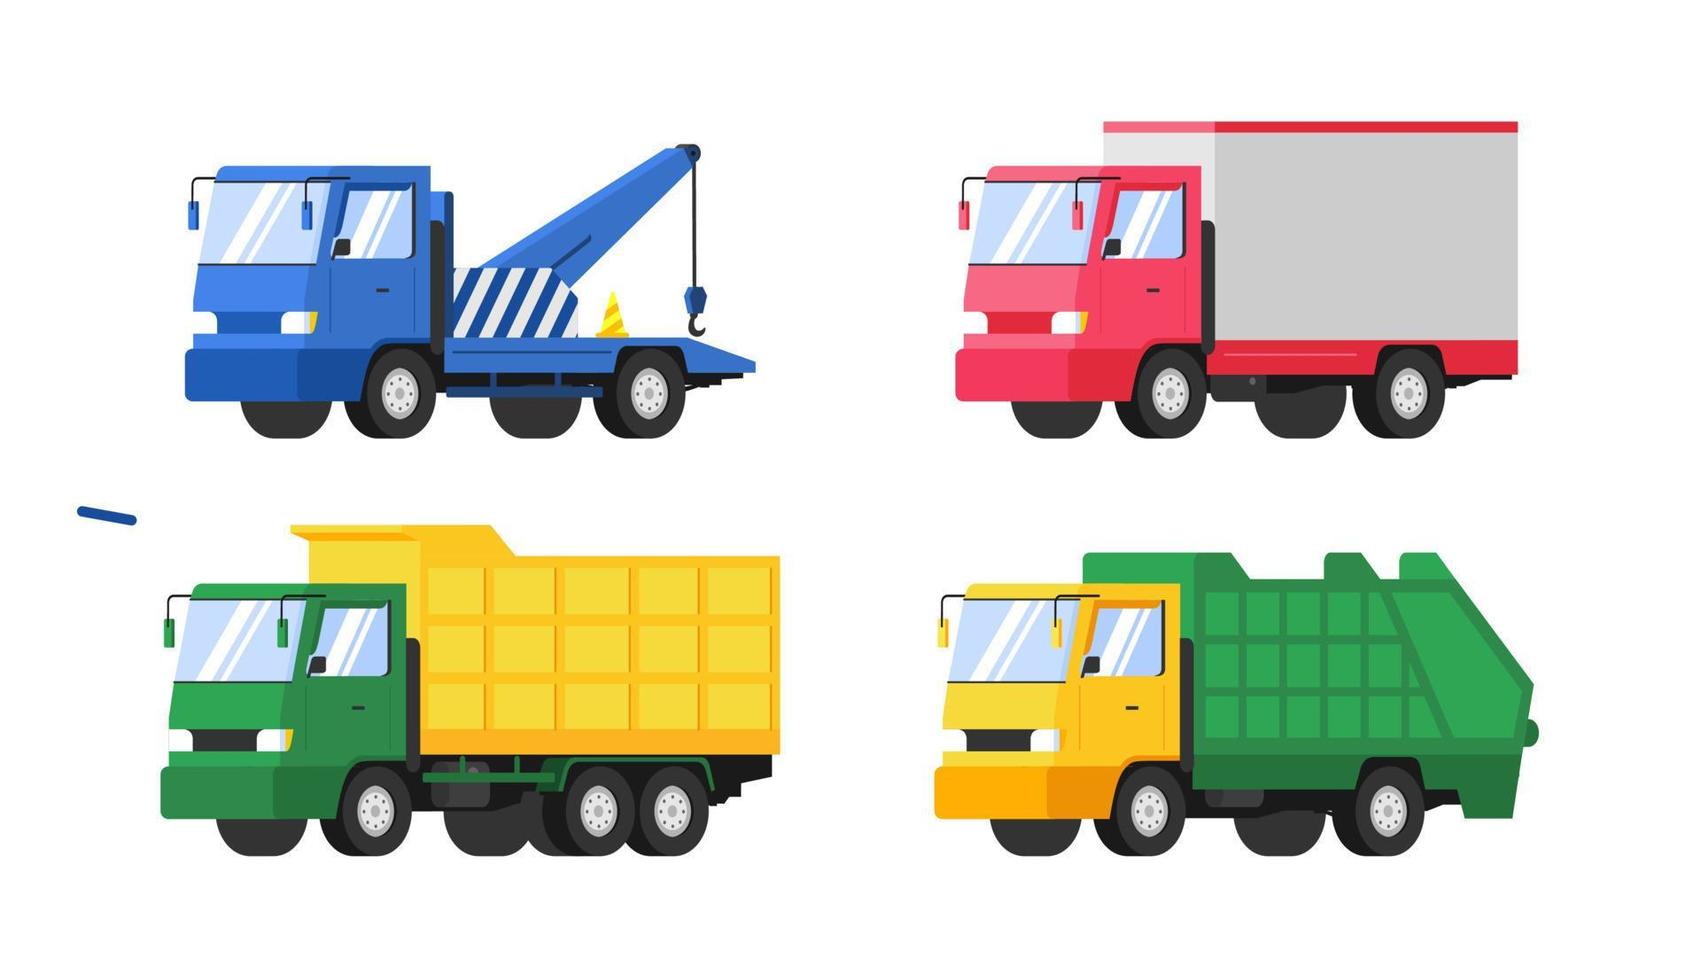 Set of heavy duty trucks. Vector flat style illustration